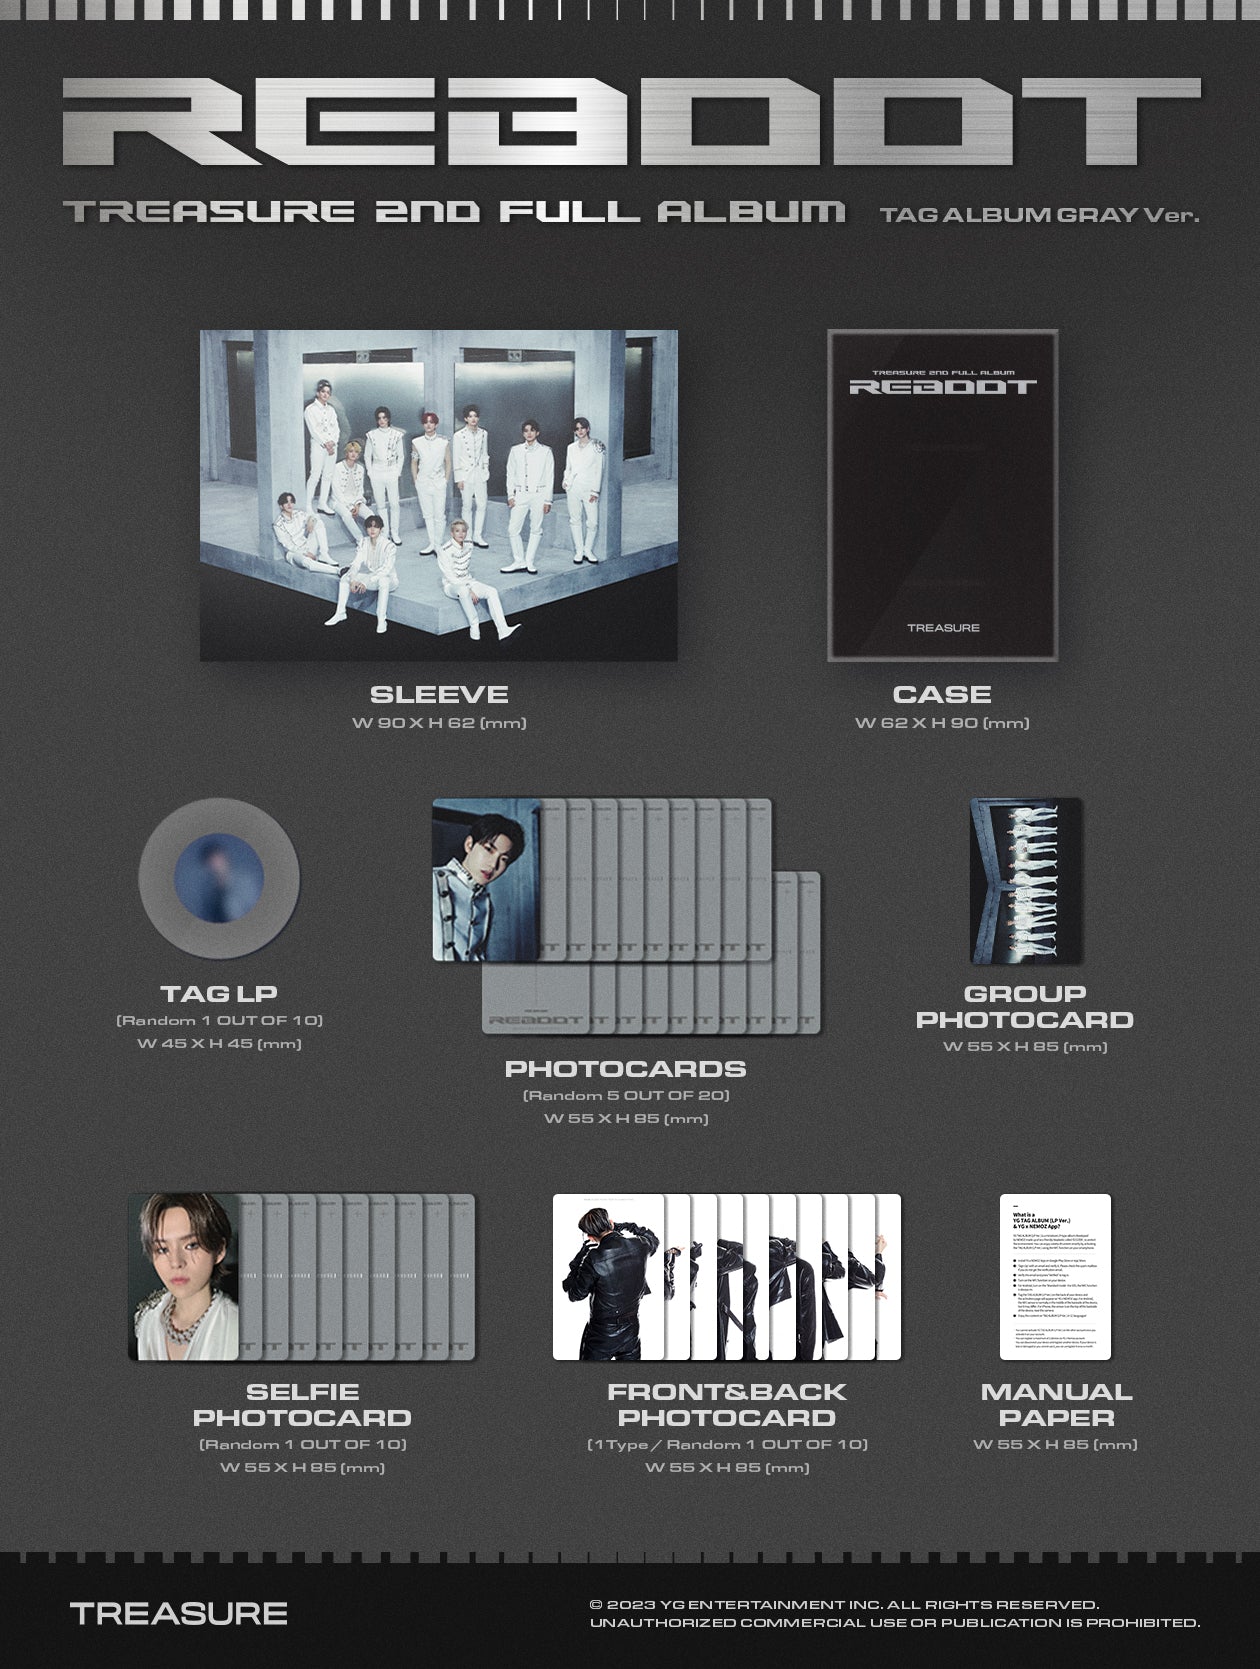 TREASURE - 2nd Full Album 'REBOOT’ (YG TAG Album) + Apple Music POB Photocard